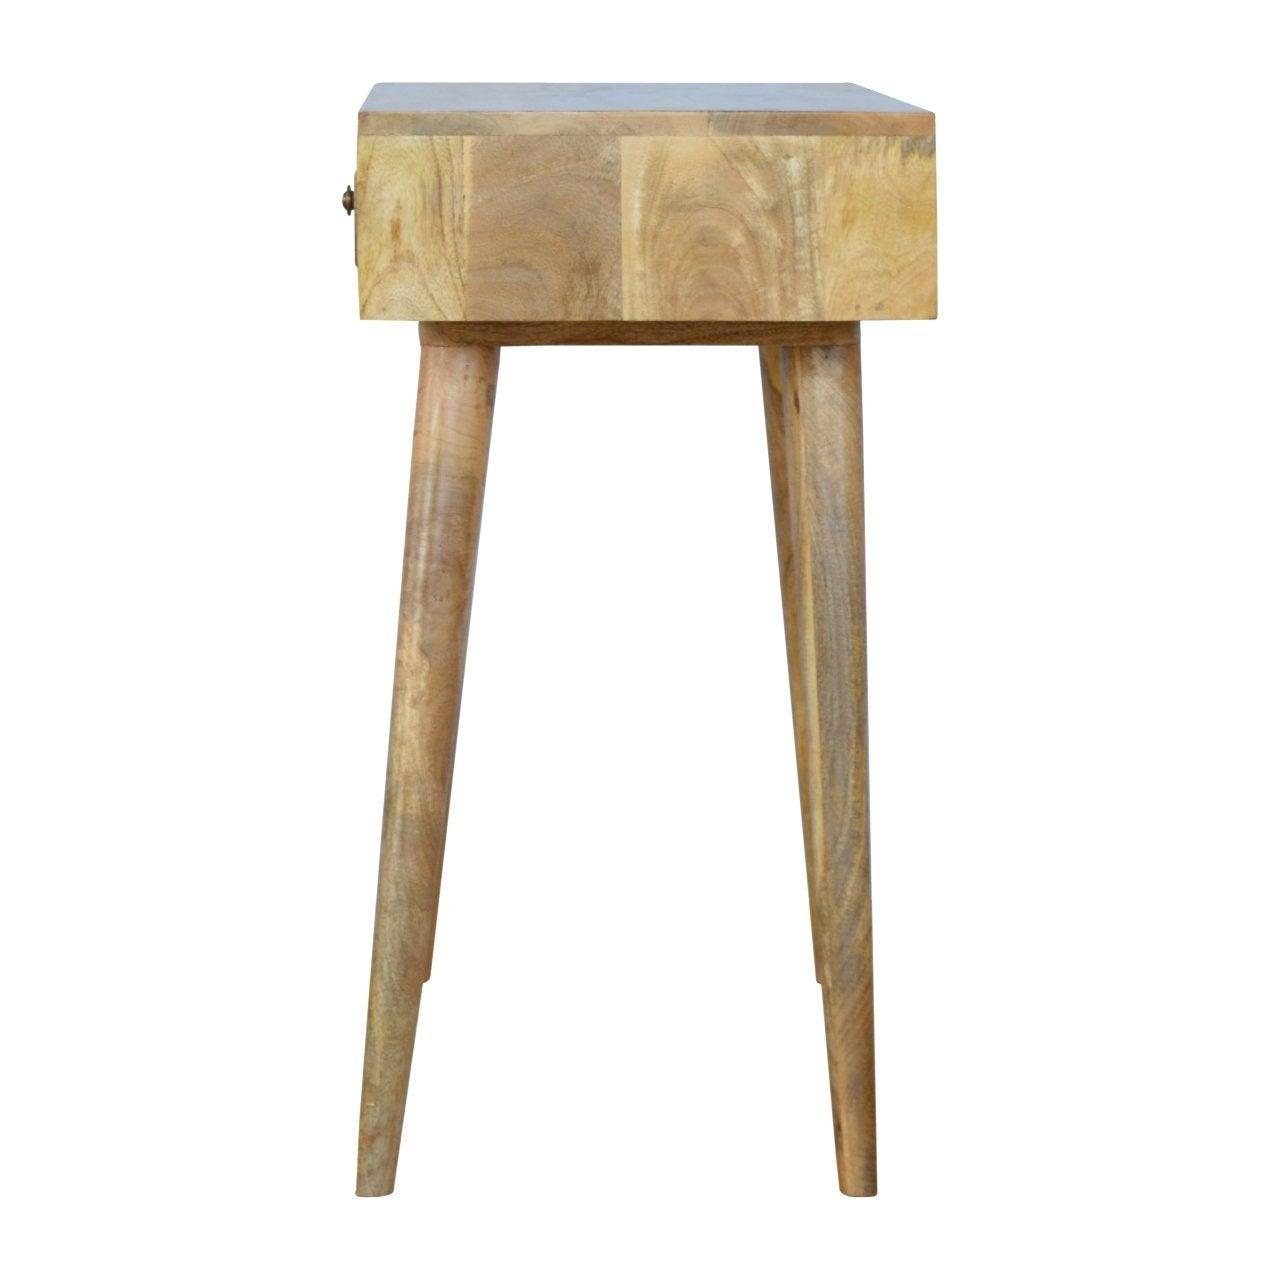 Pineapple carved console table - crimblefest furniture - image 8